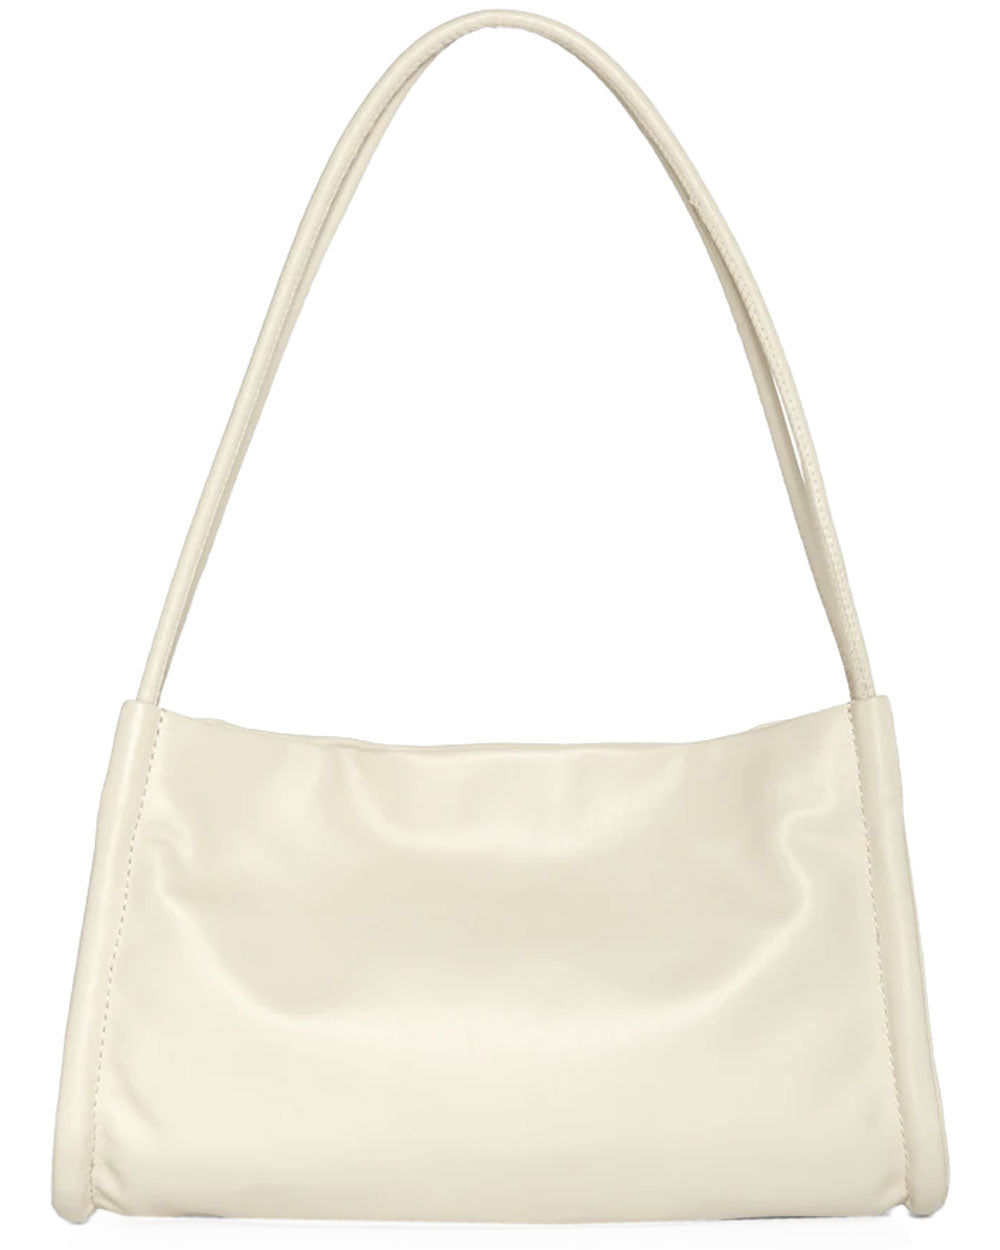 Gia Shoulder bag in Cream